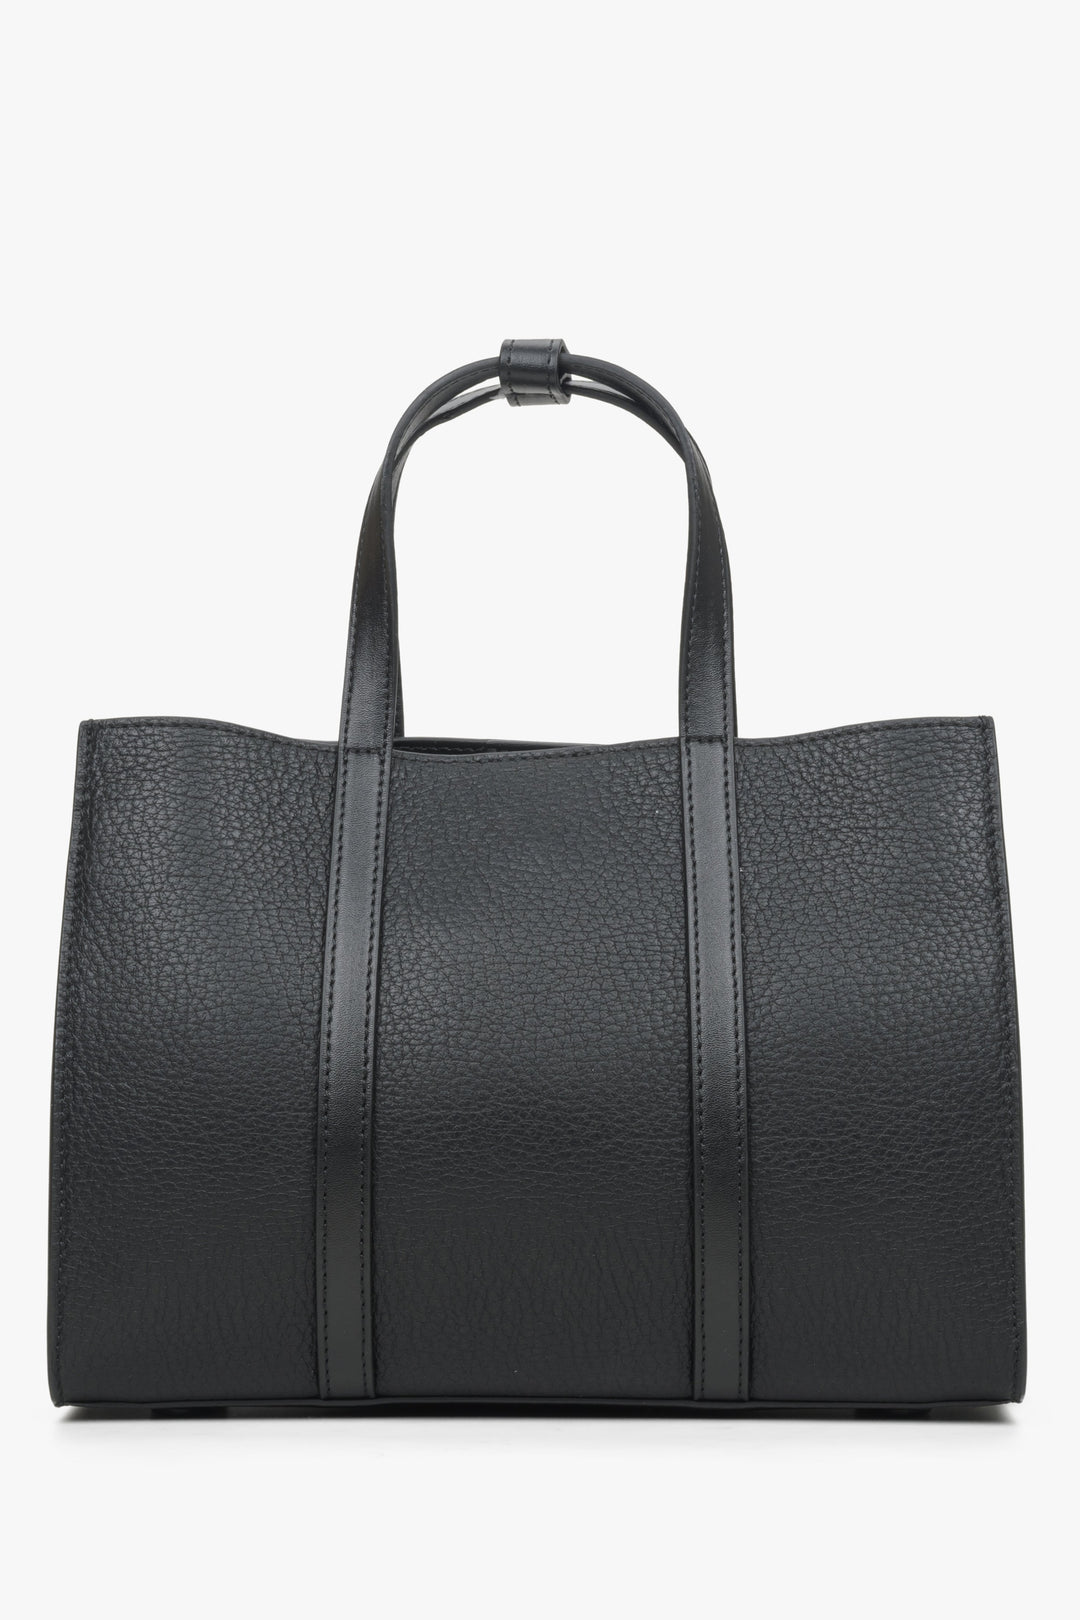 Women's black shopper bag made of genuine leather by Estro.